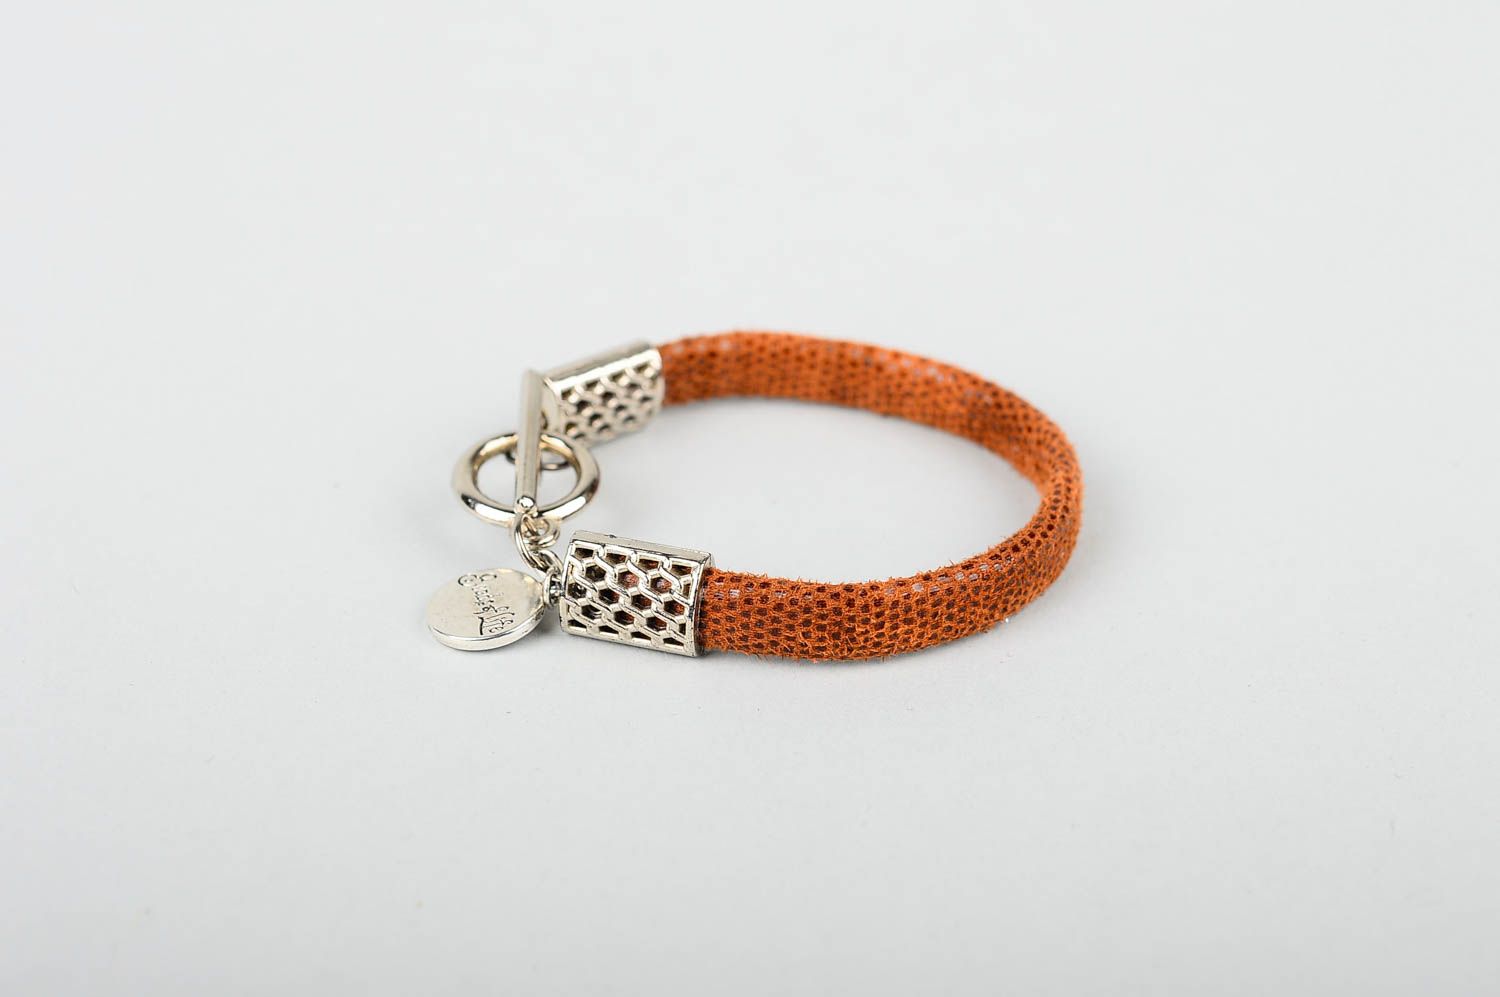 Womens handmade leather bracelet wrist bracelet designs leather goods gift ideas photo 3